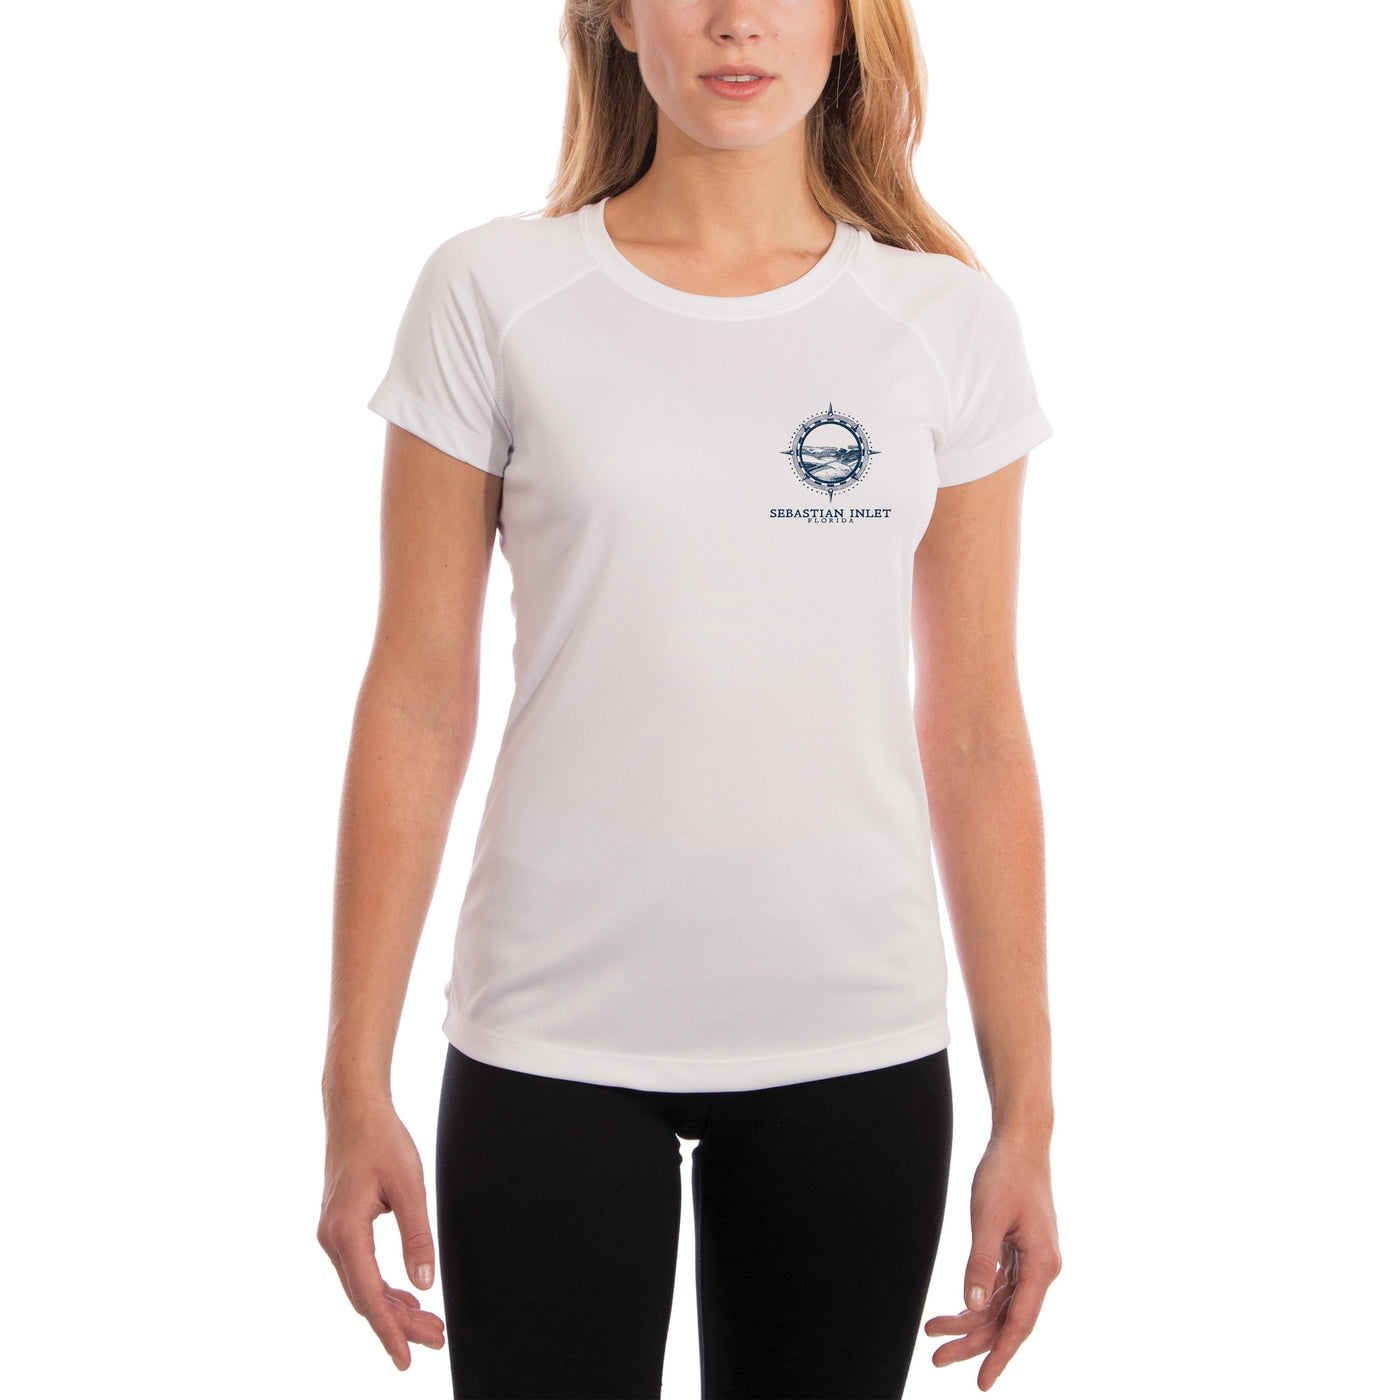 Compass Vintage Sebastian Inlet Women's UPF 50+ Short Sleeve T-shirt